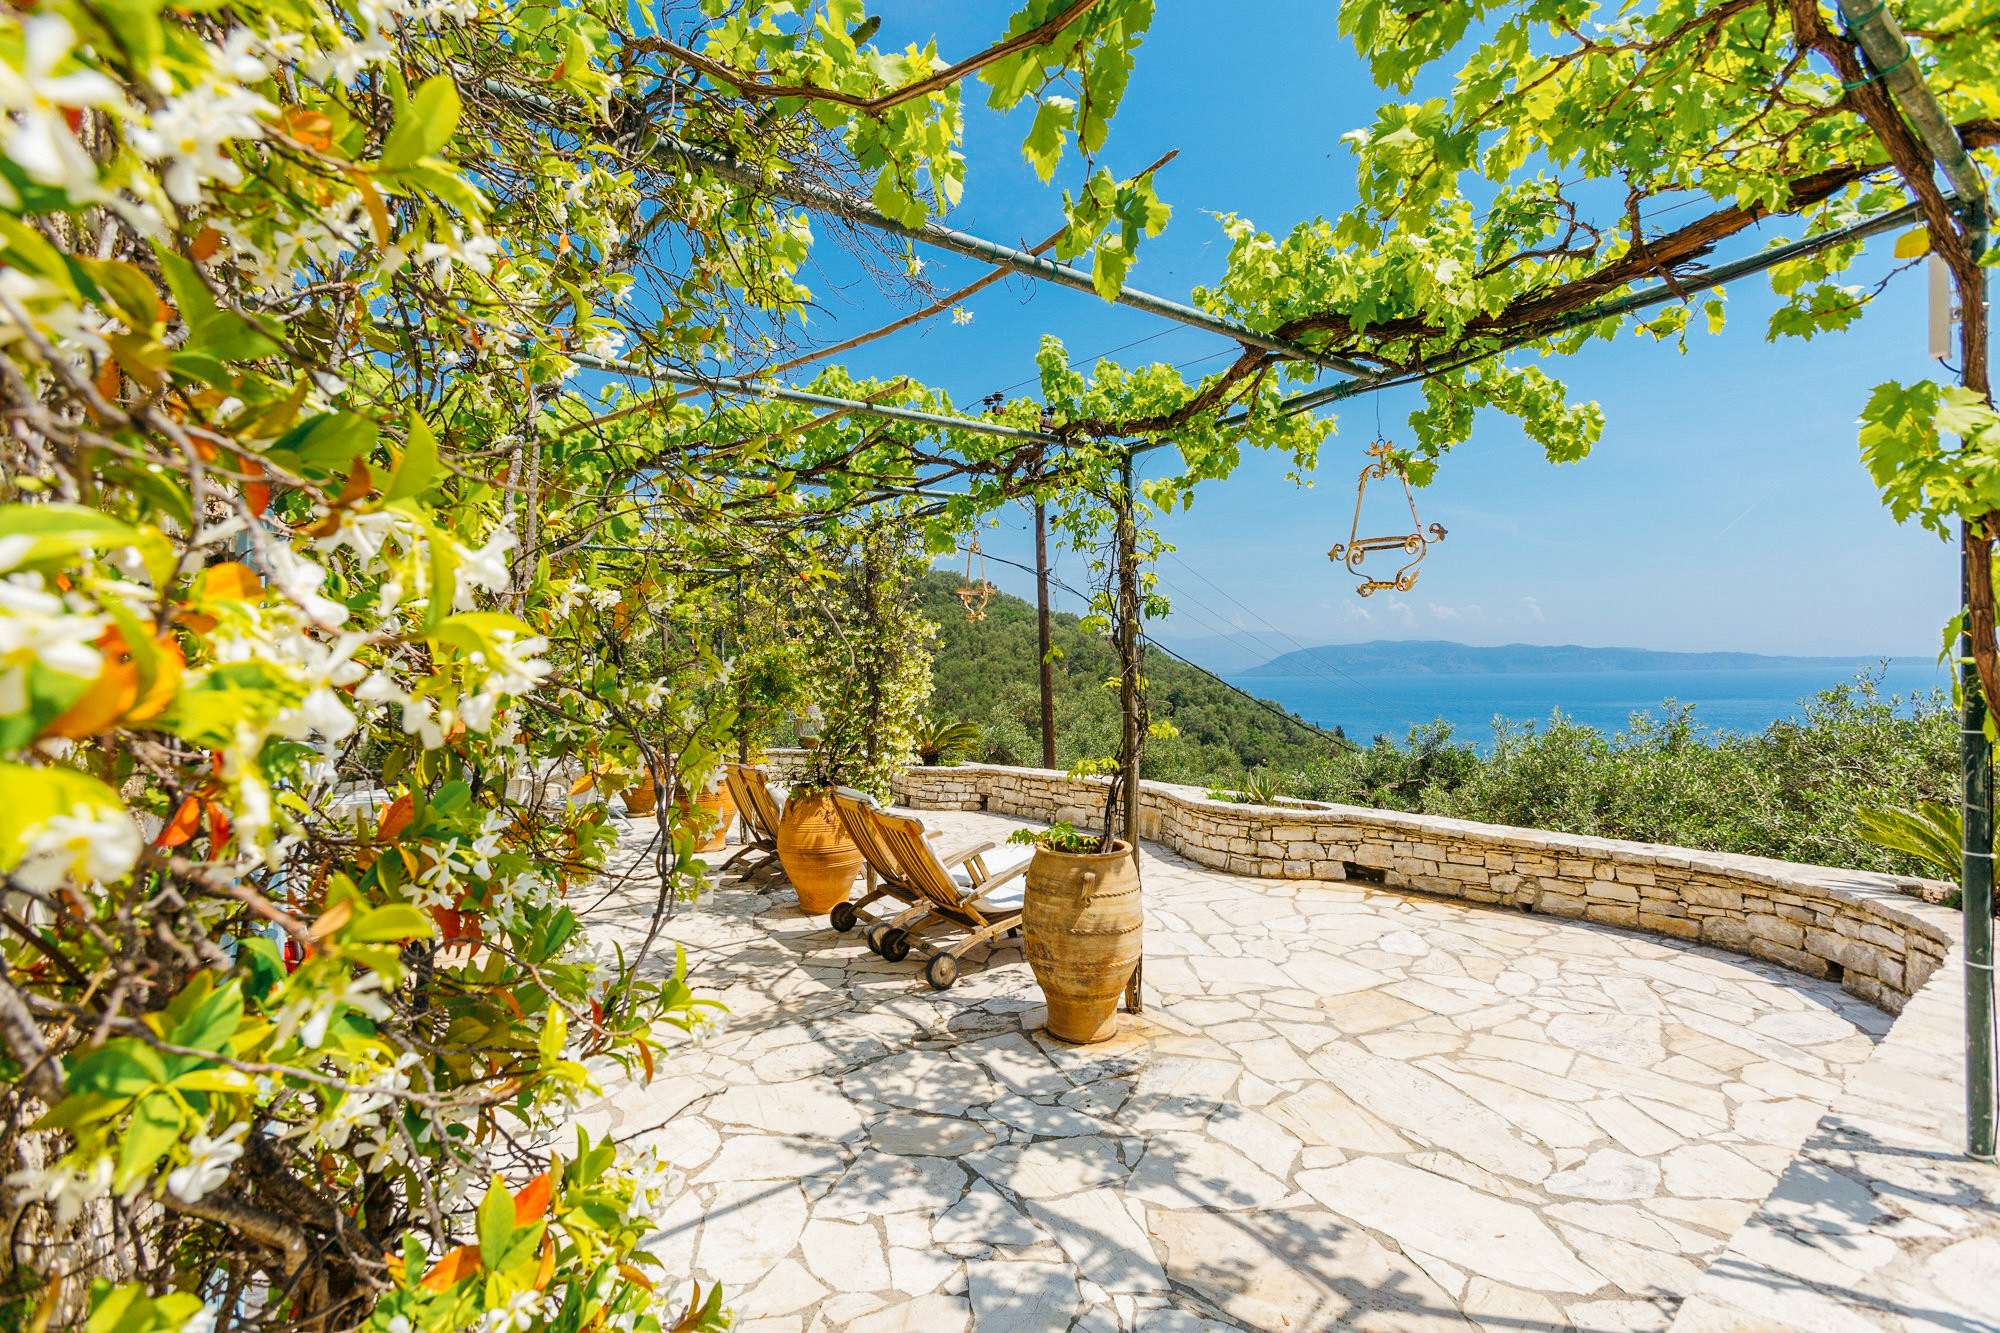 Holiday villa in Corfu Greece